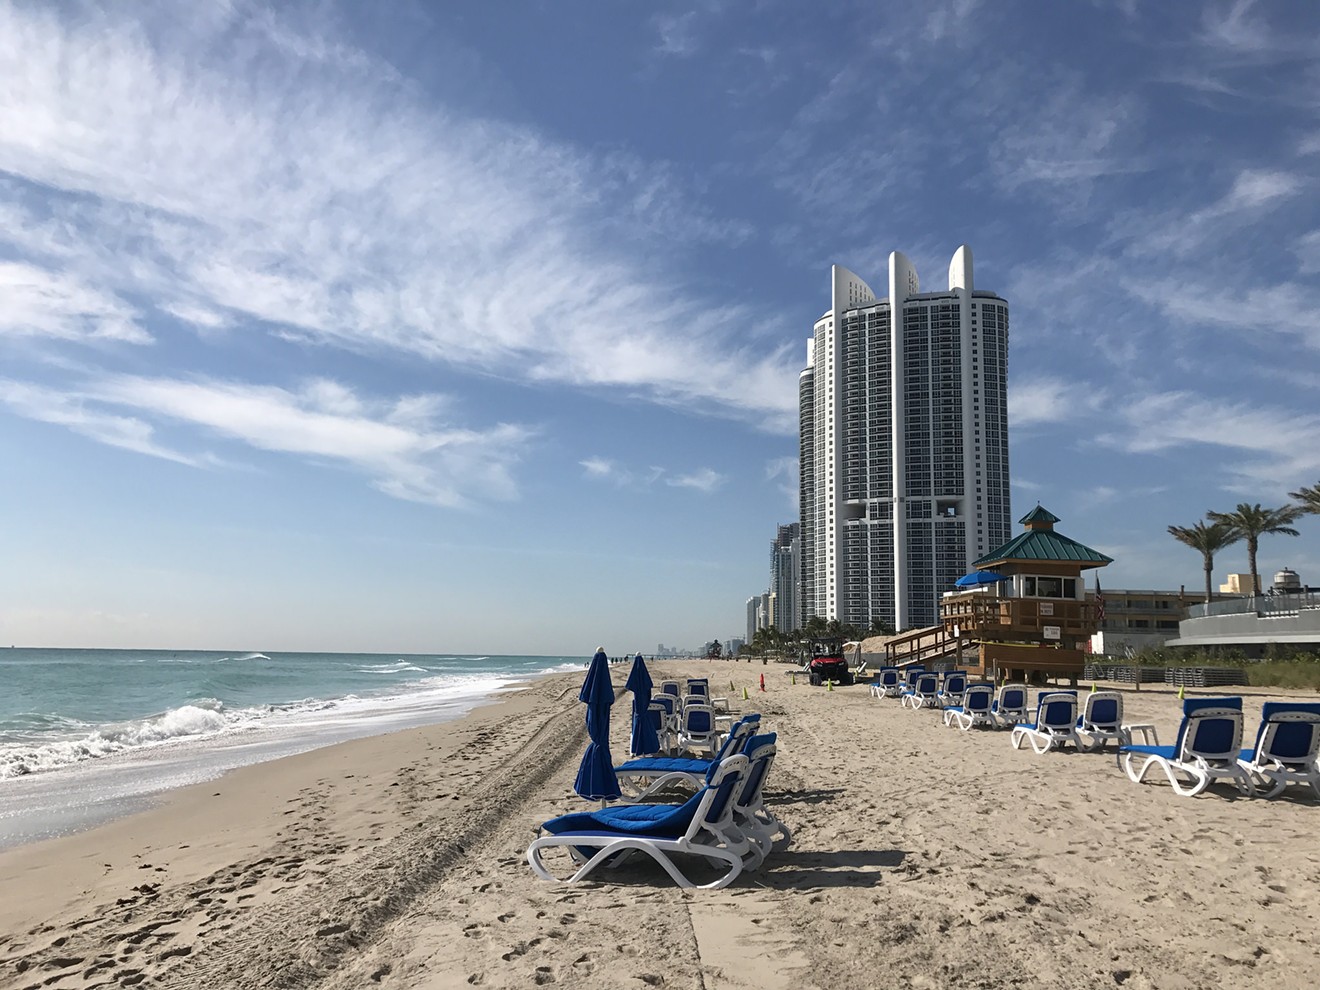 The Trump International Beach Resort overlooks the sand in Sunny Isles Beach.